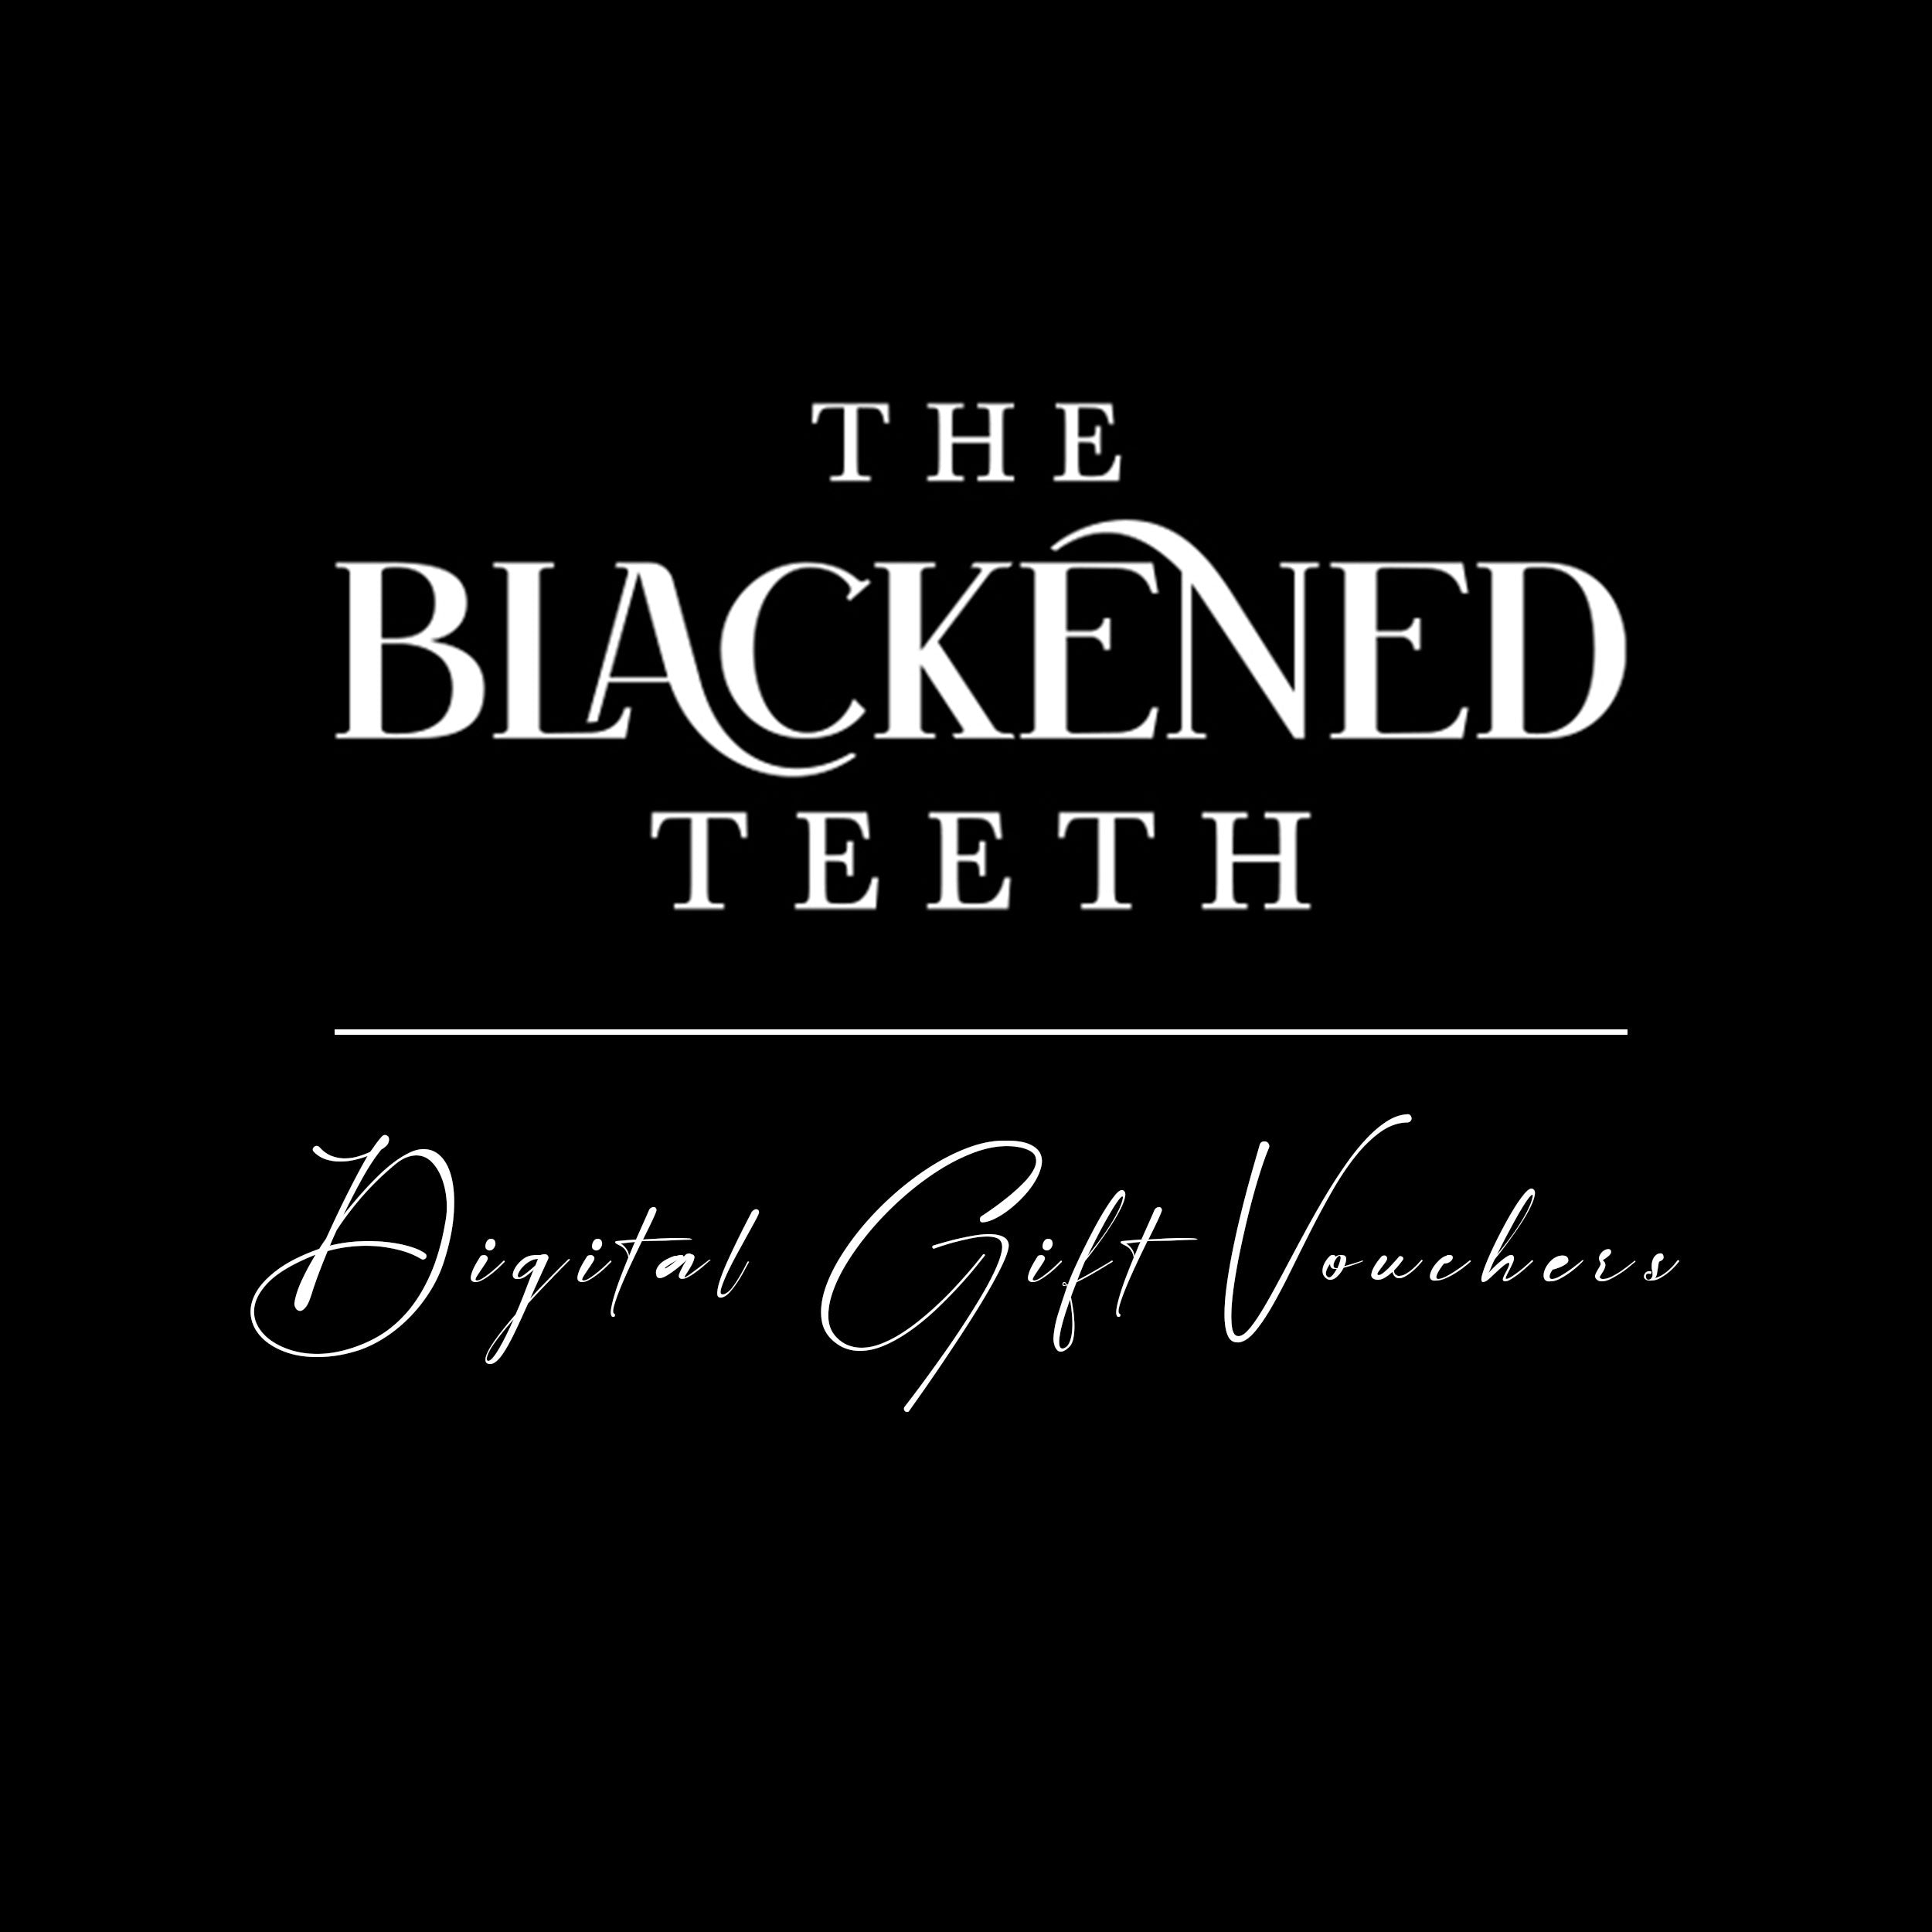 Digital gift voucher - The Blackened Teeth